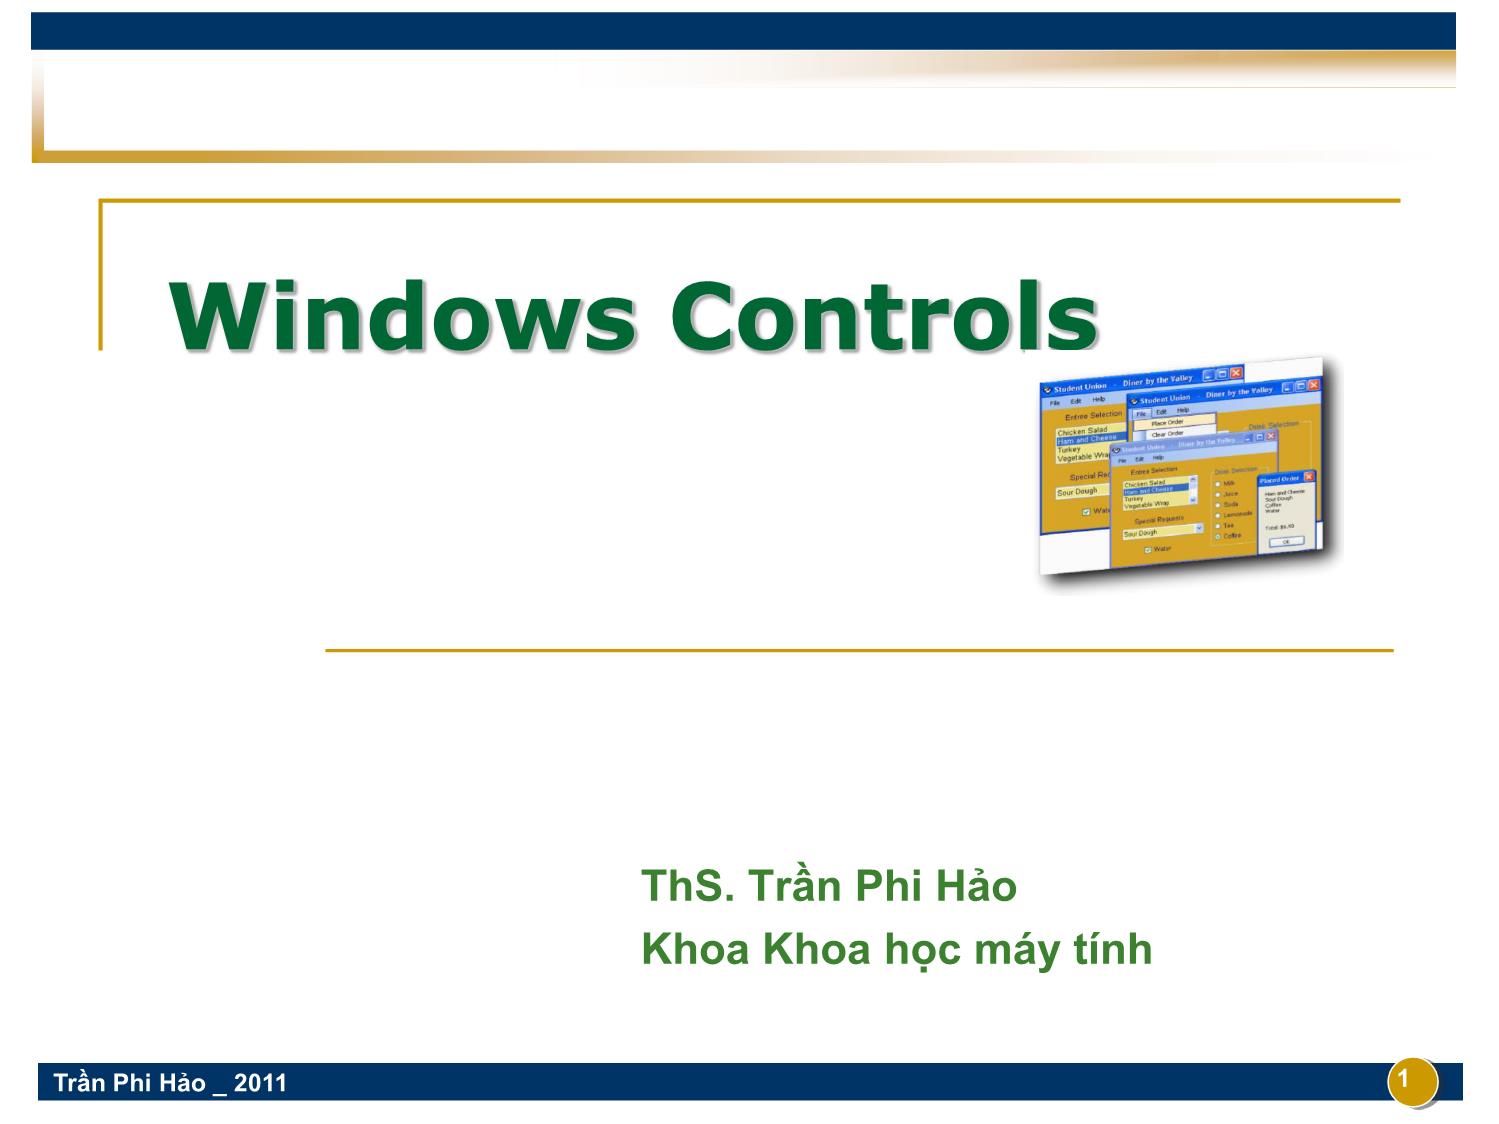 Windows Controls trang 1